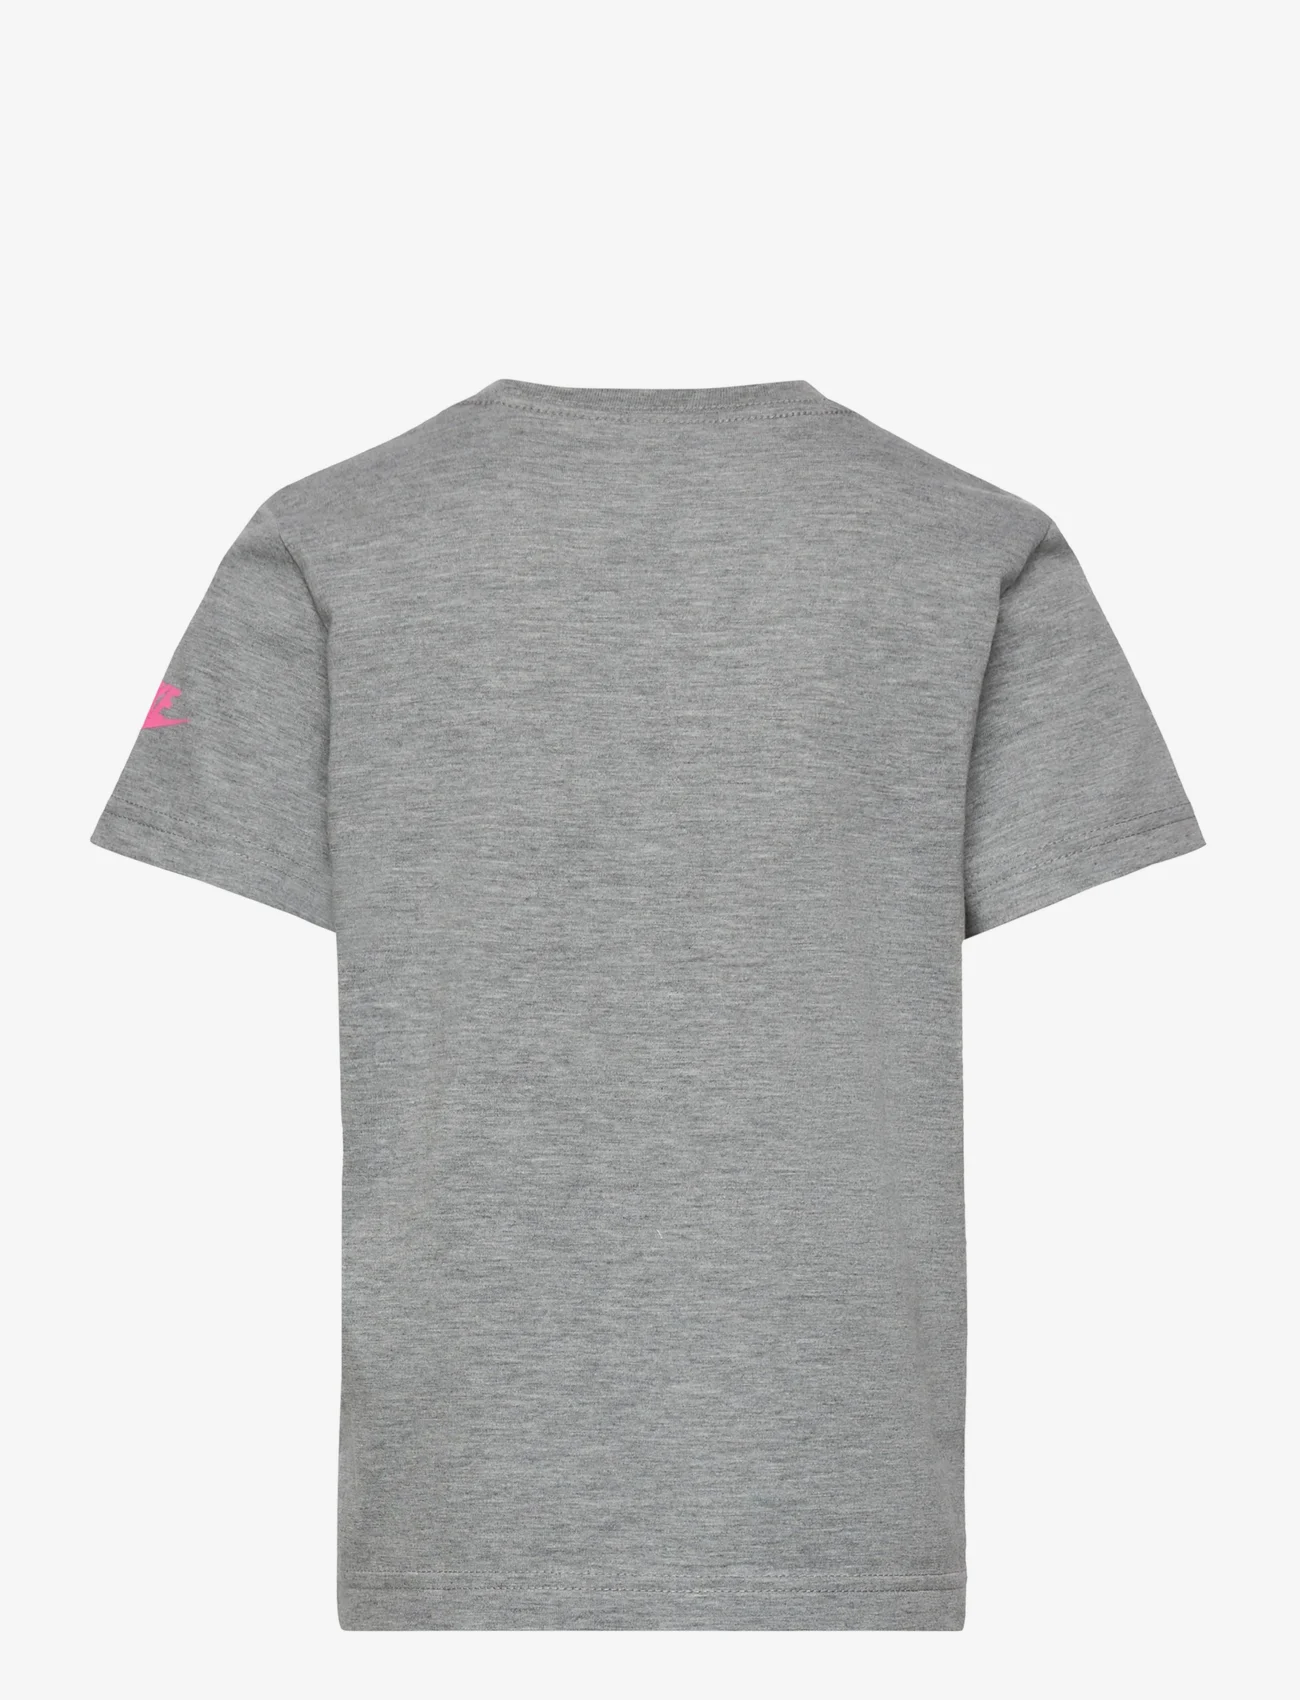 Nike - JDI 3D SHORT SLEEVE TEE - kortærmede t-shirts - dk grey heather - 1